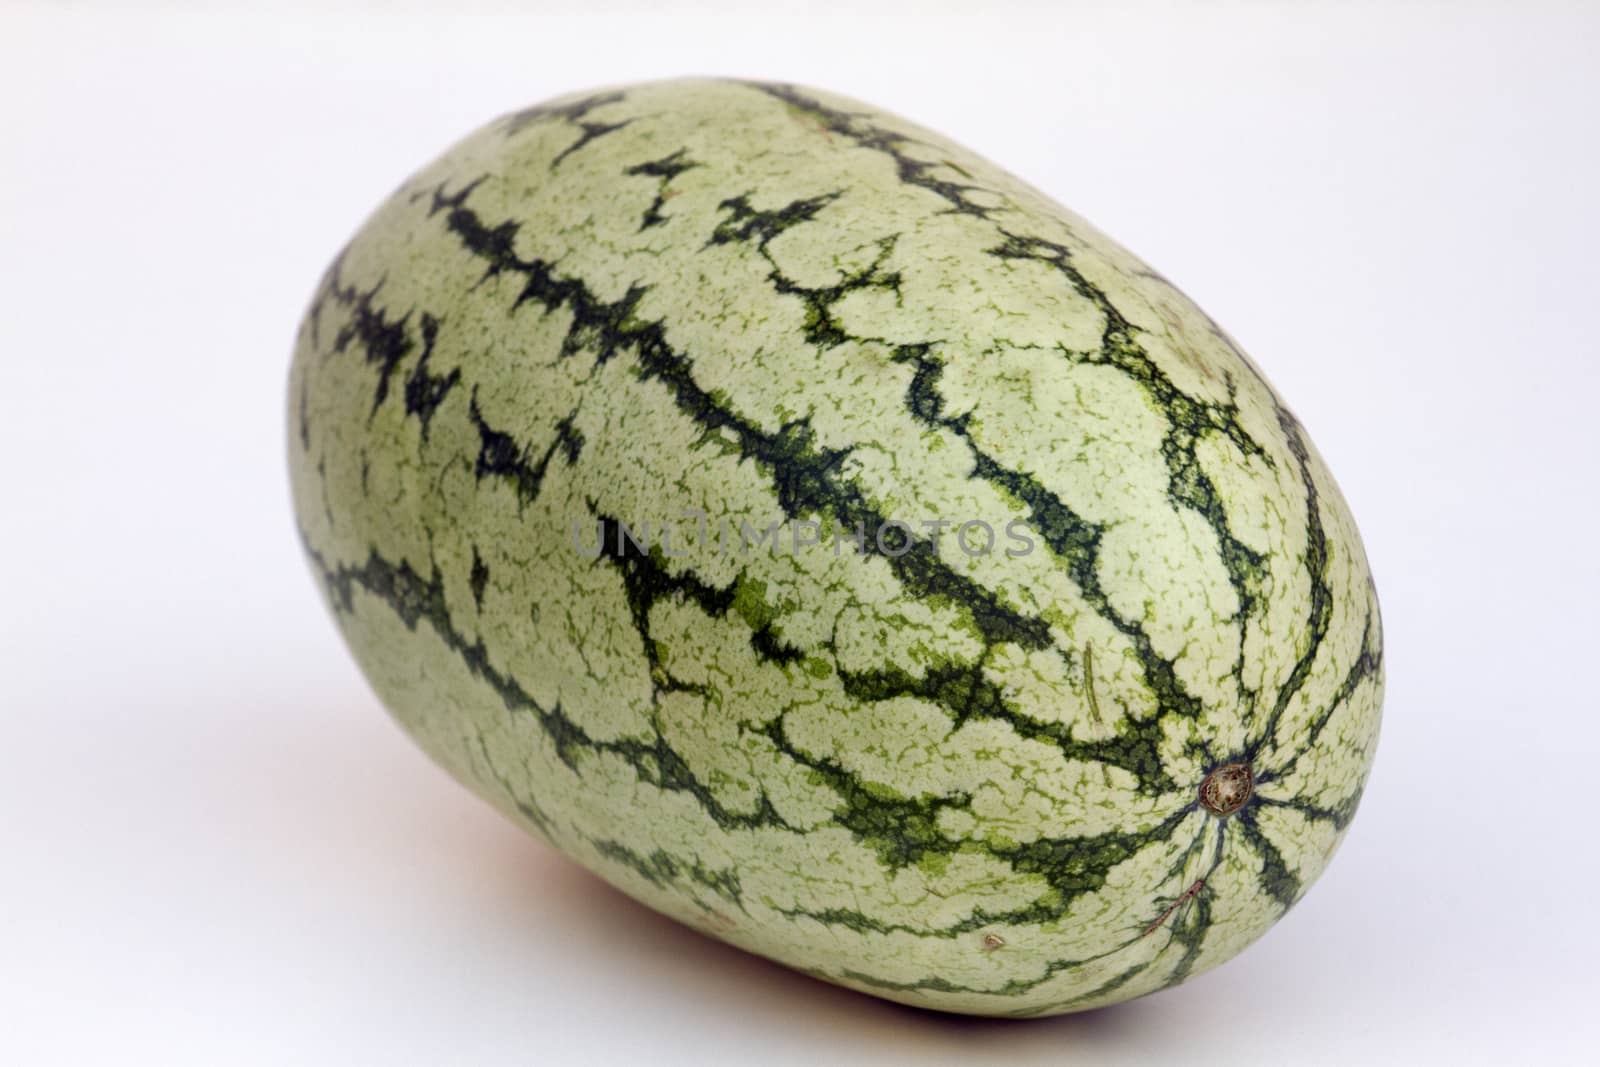 Large ripe water-melon  India Goa.